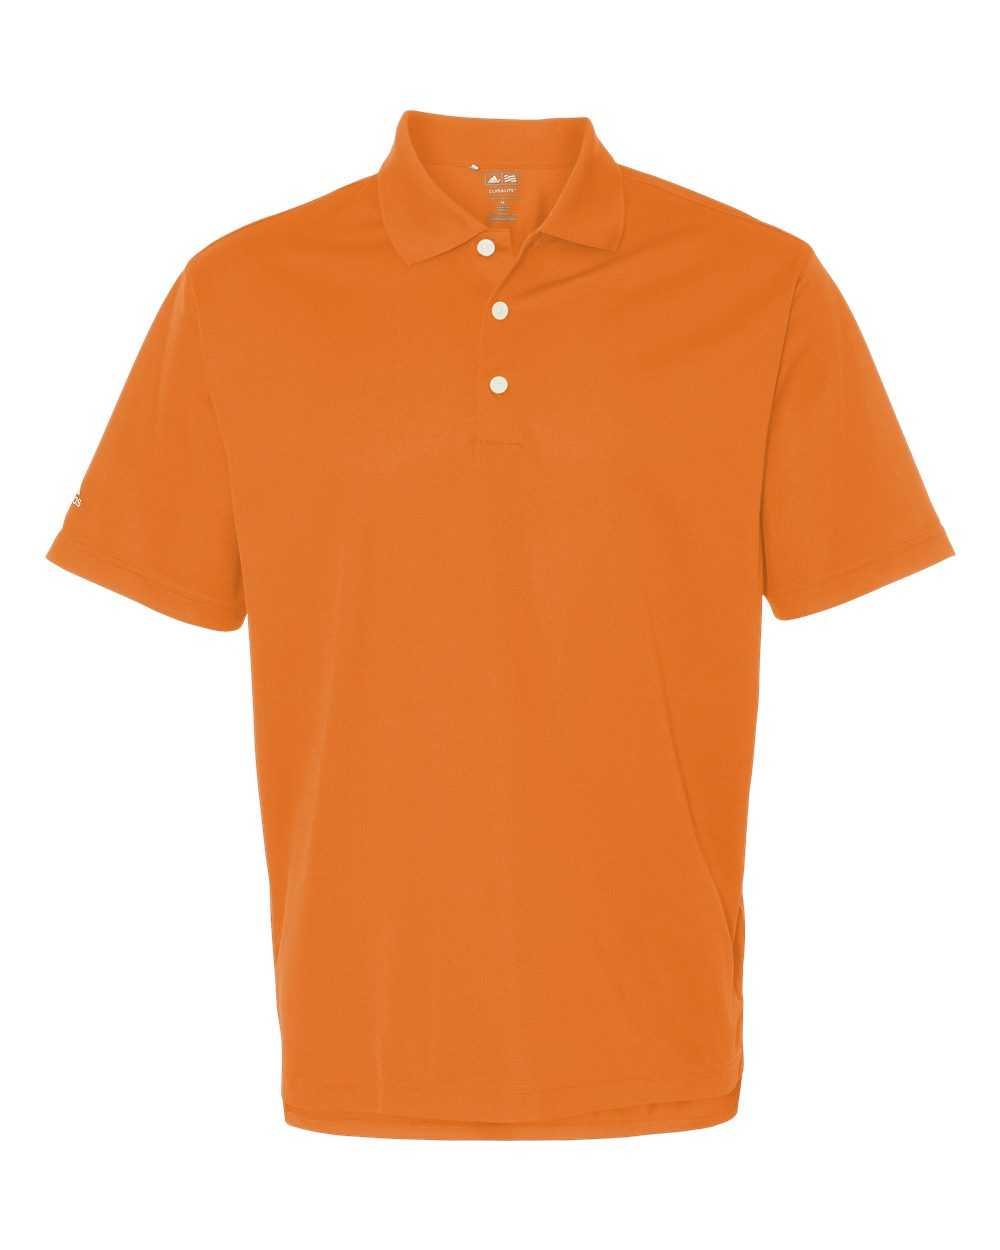 Adidas A130 Basic Sport Shirt - Bright Orange White - HIT a Double